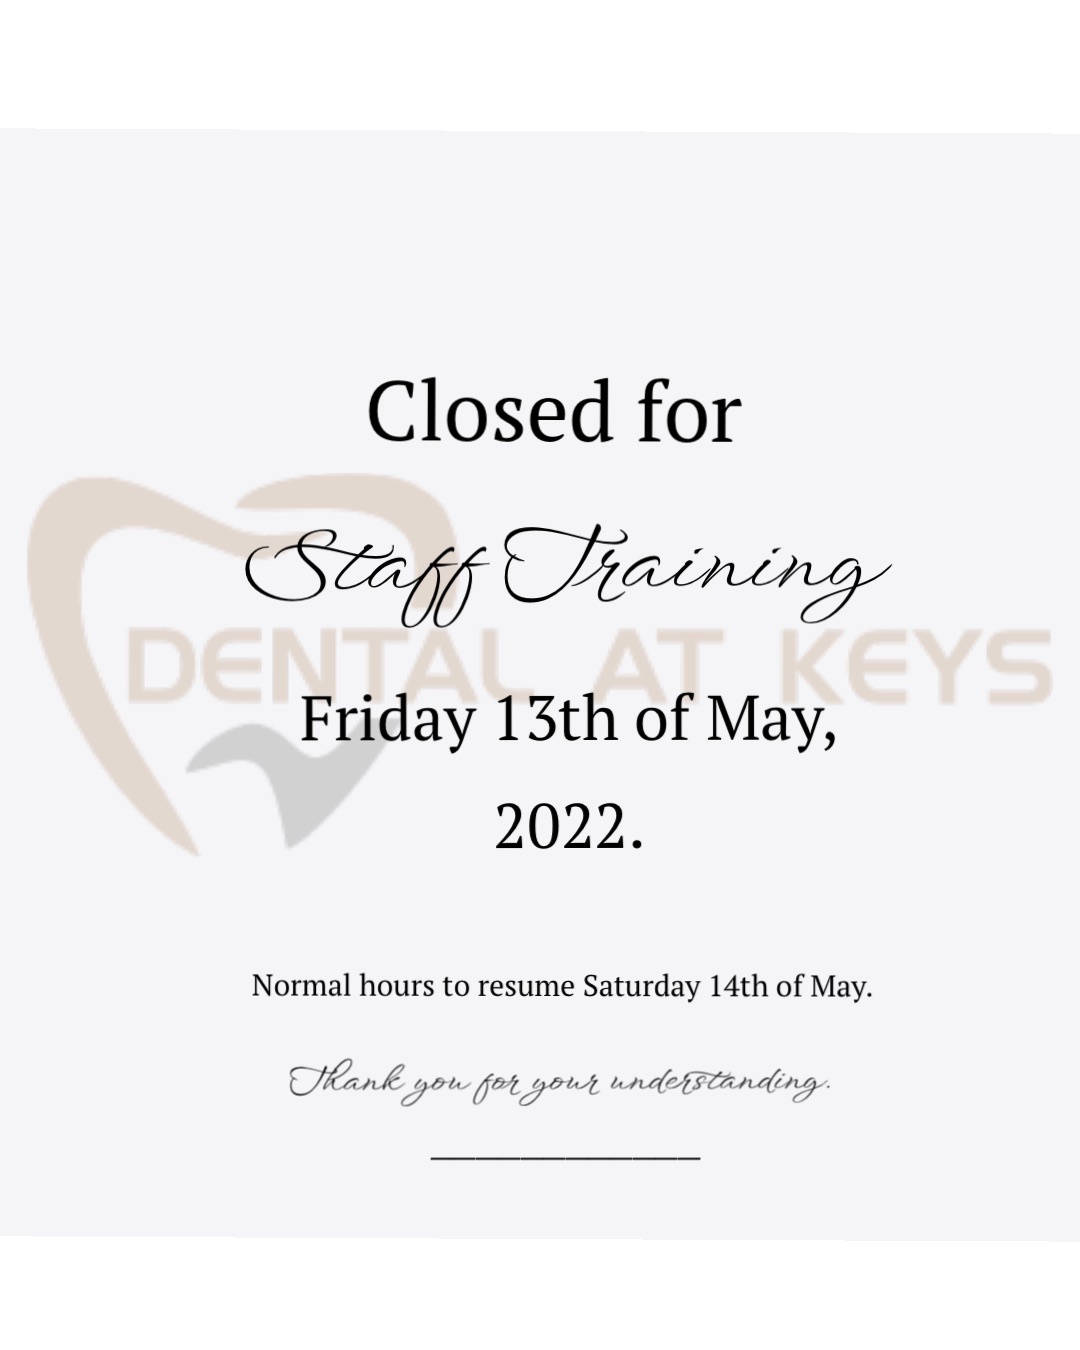 Staff Training- Closed